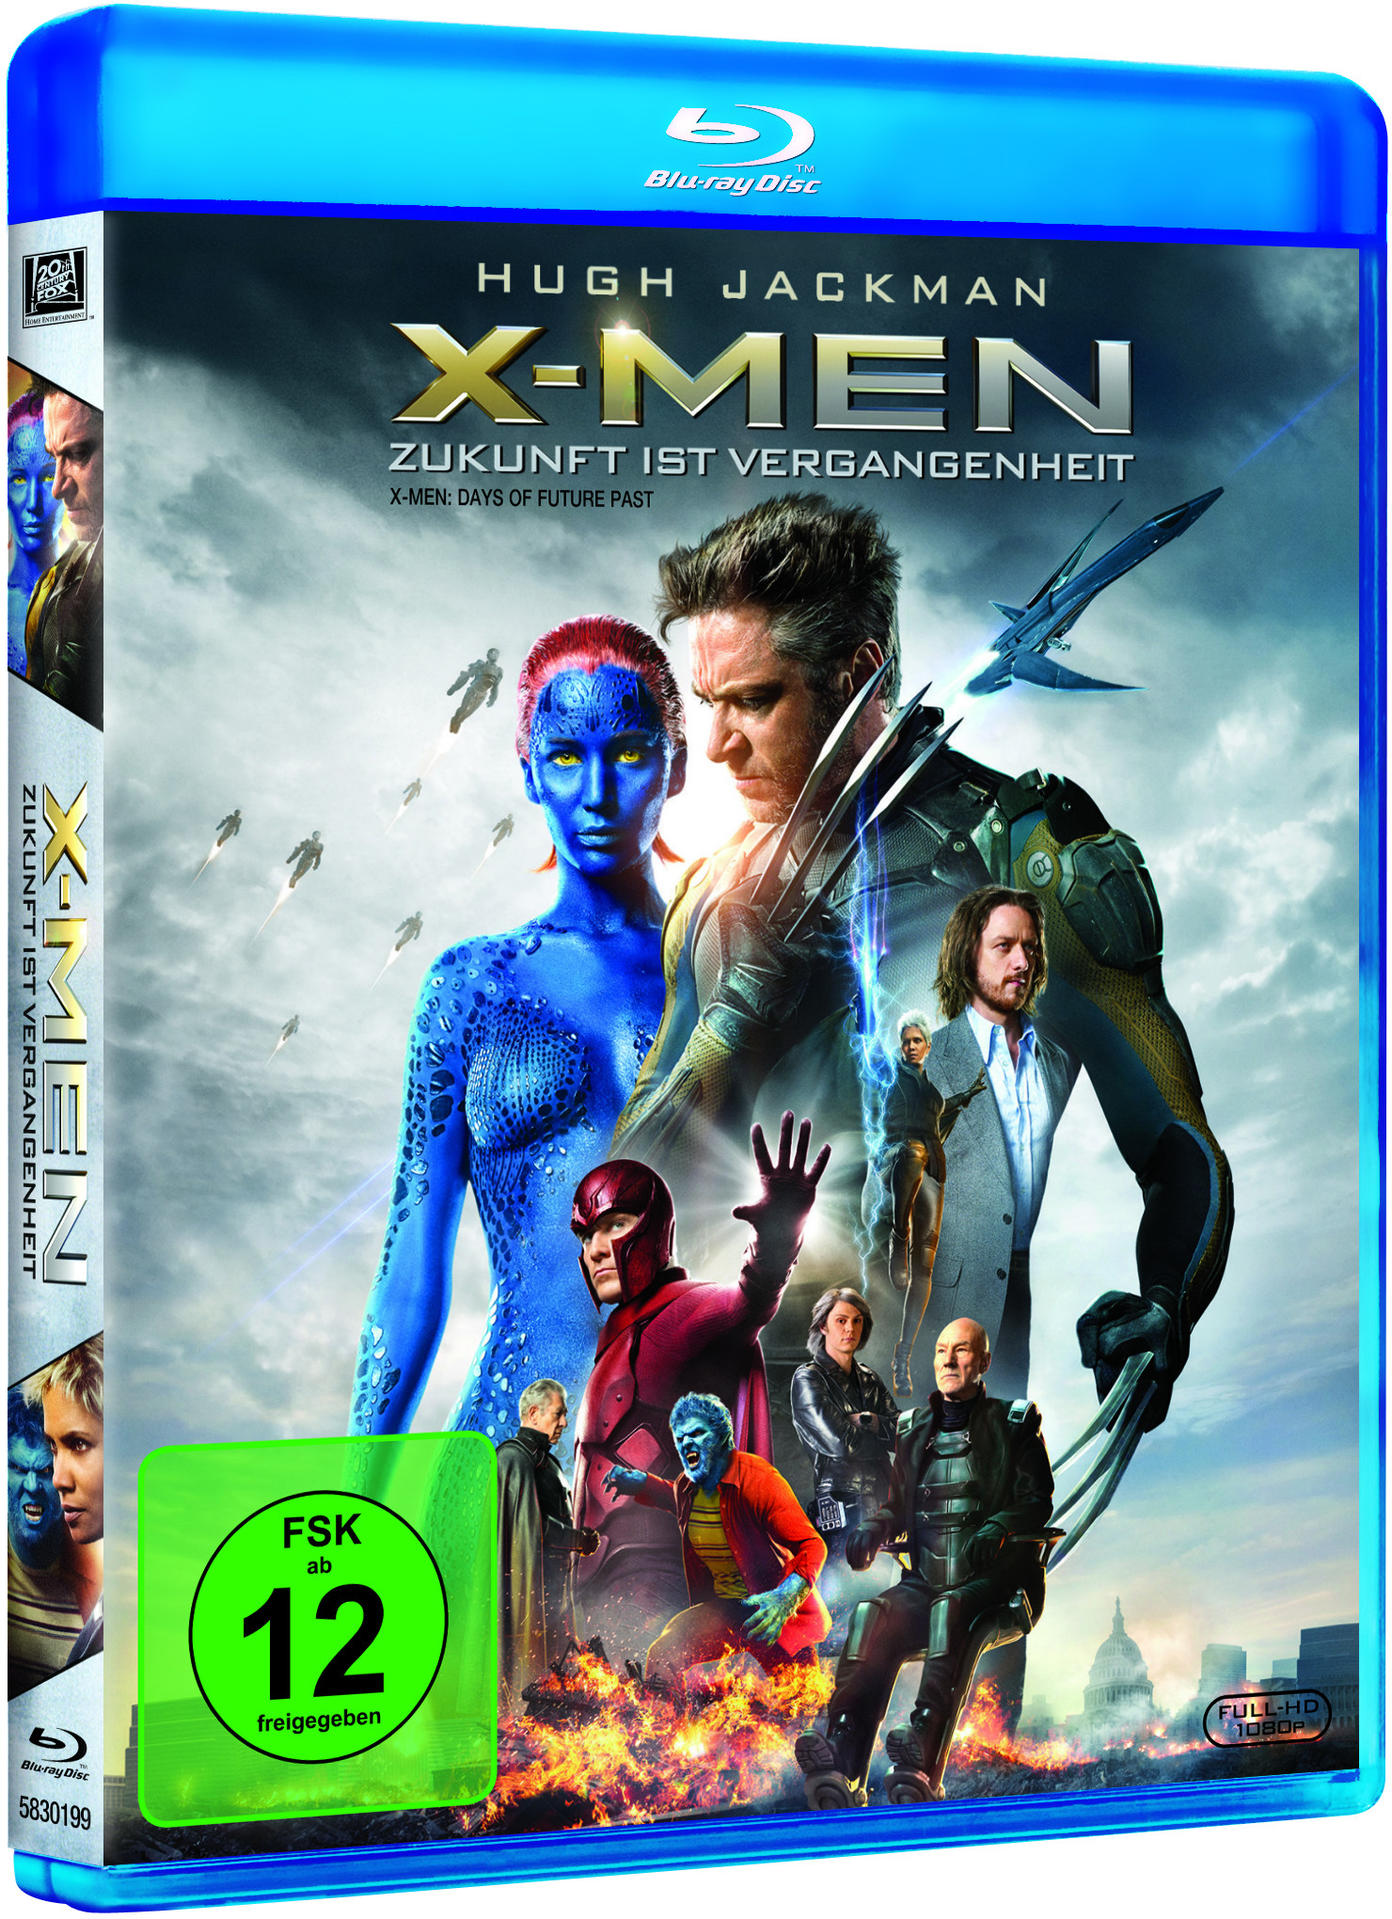 ist Zukunft - Blu-ray Vergangenheit X-Men